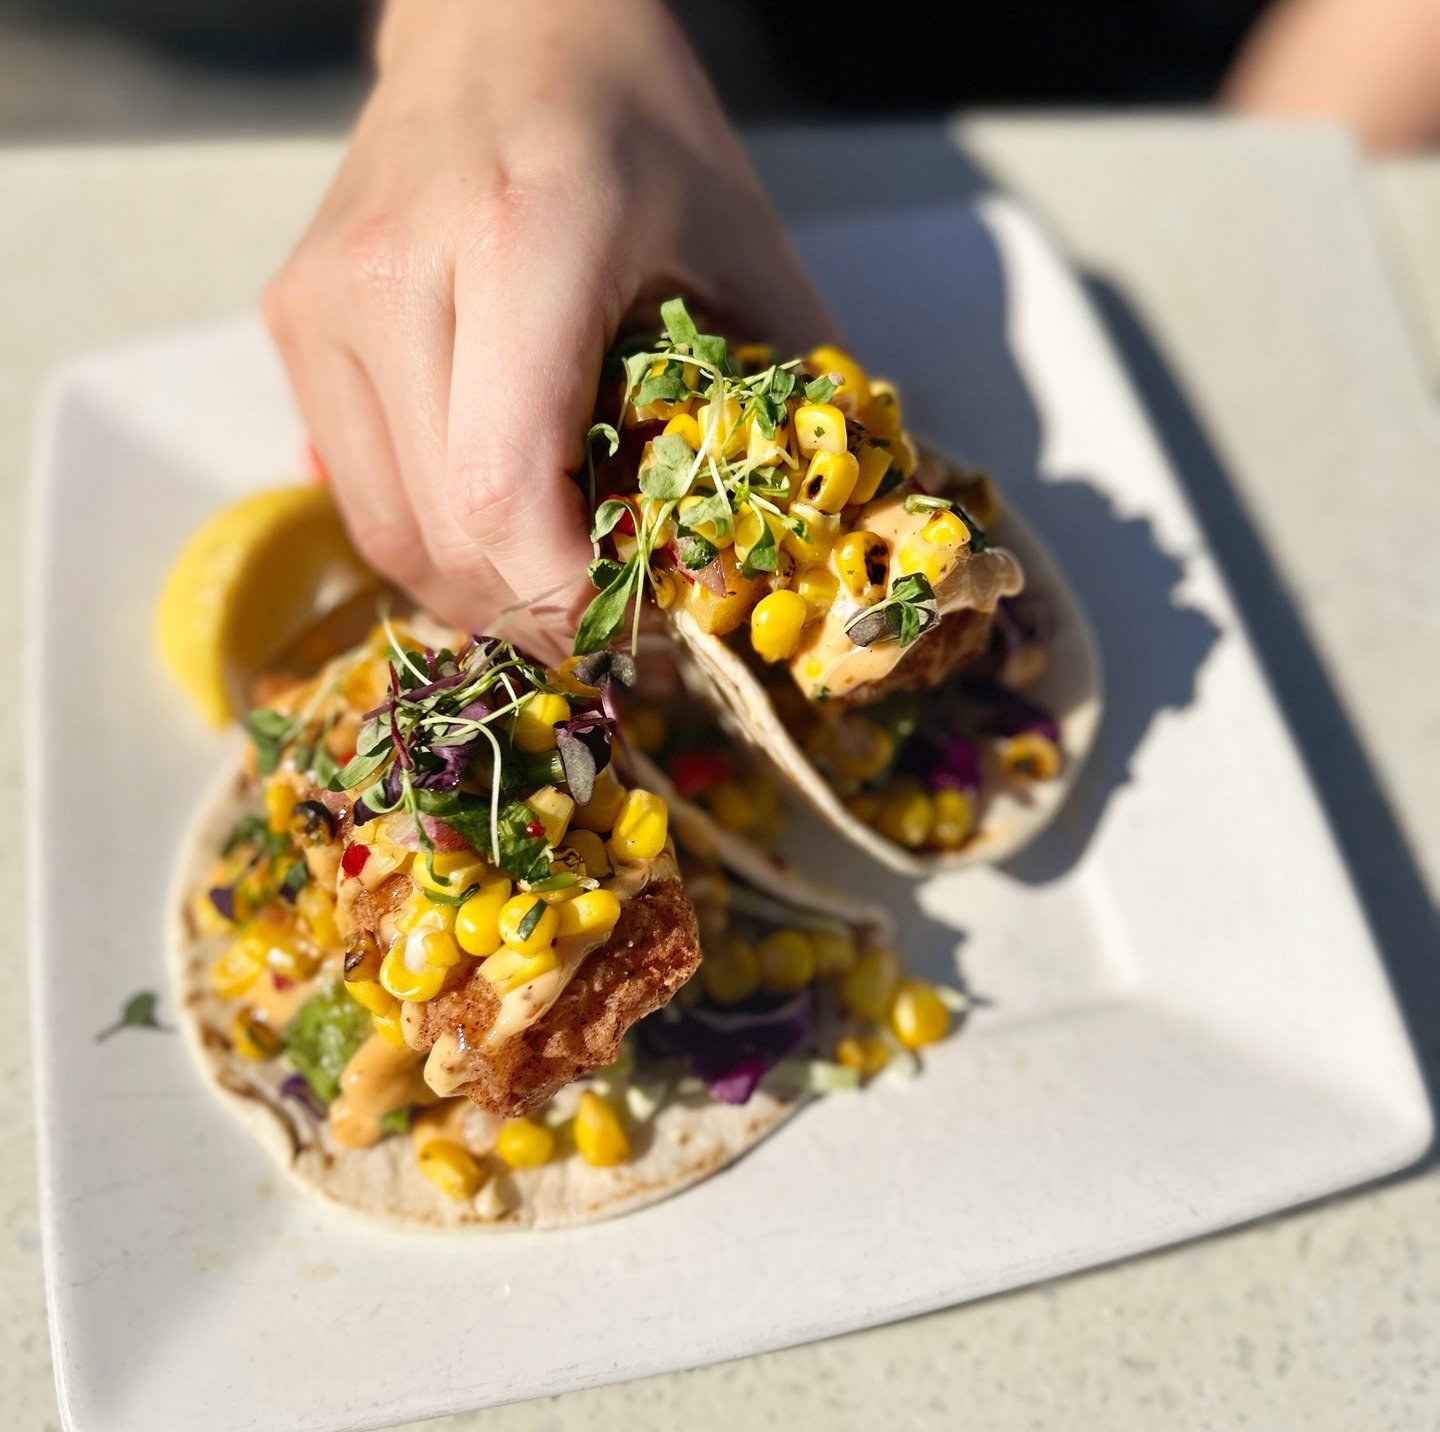 Cinco de Mayo calls for our Fish Tacos! 🌮